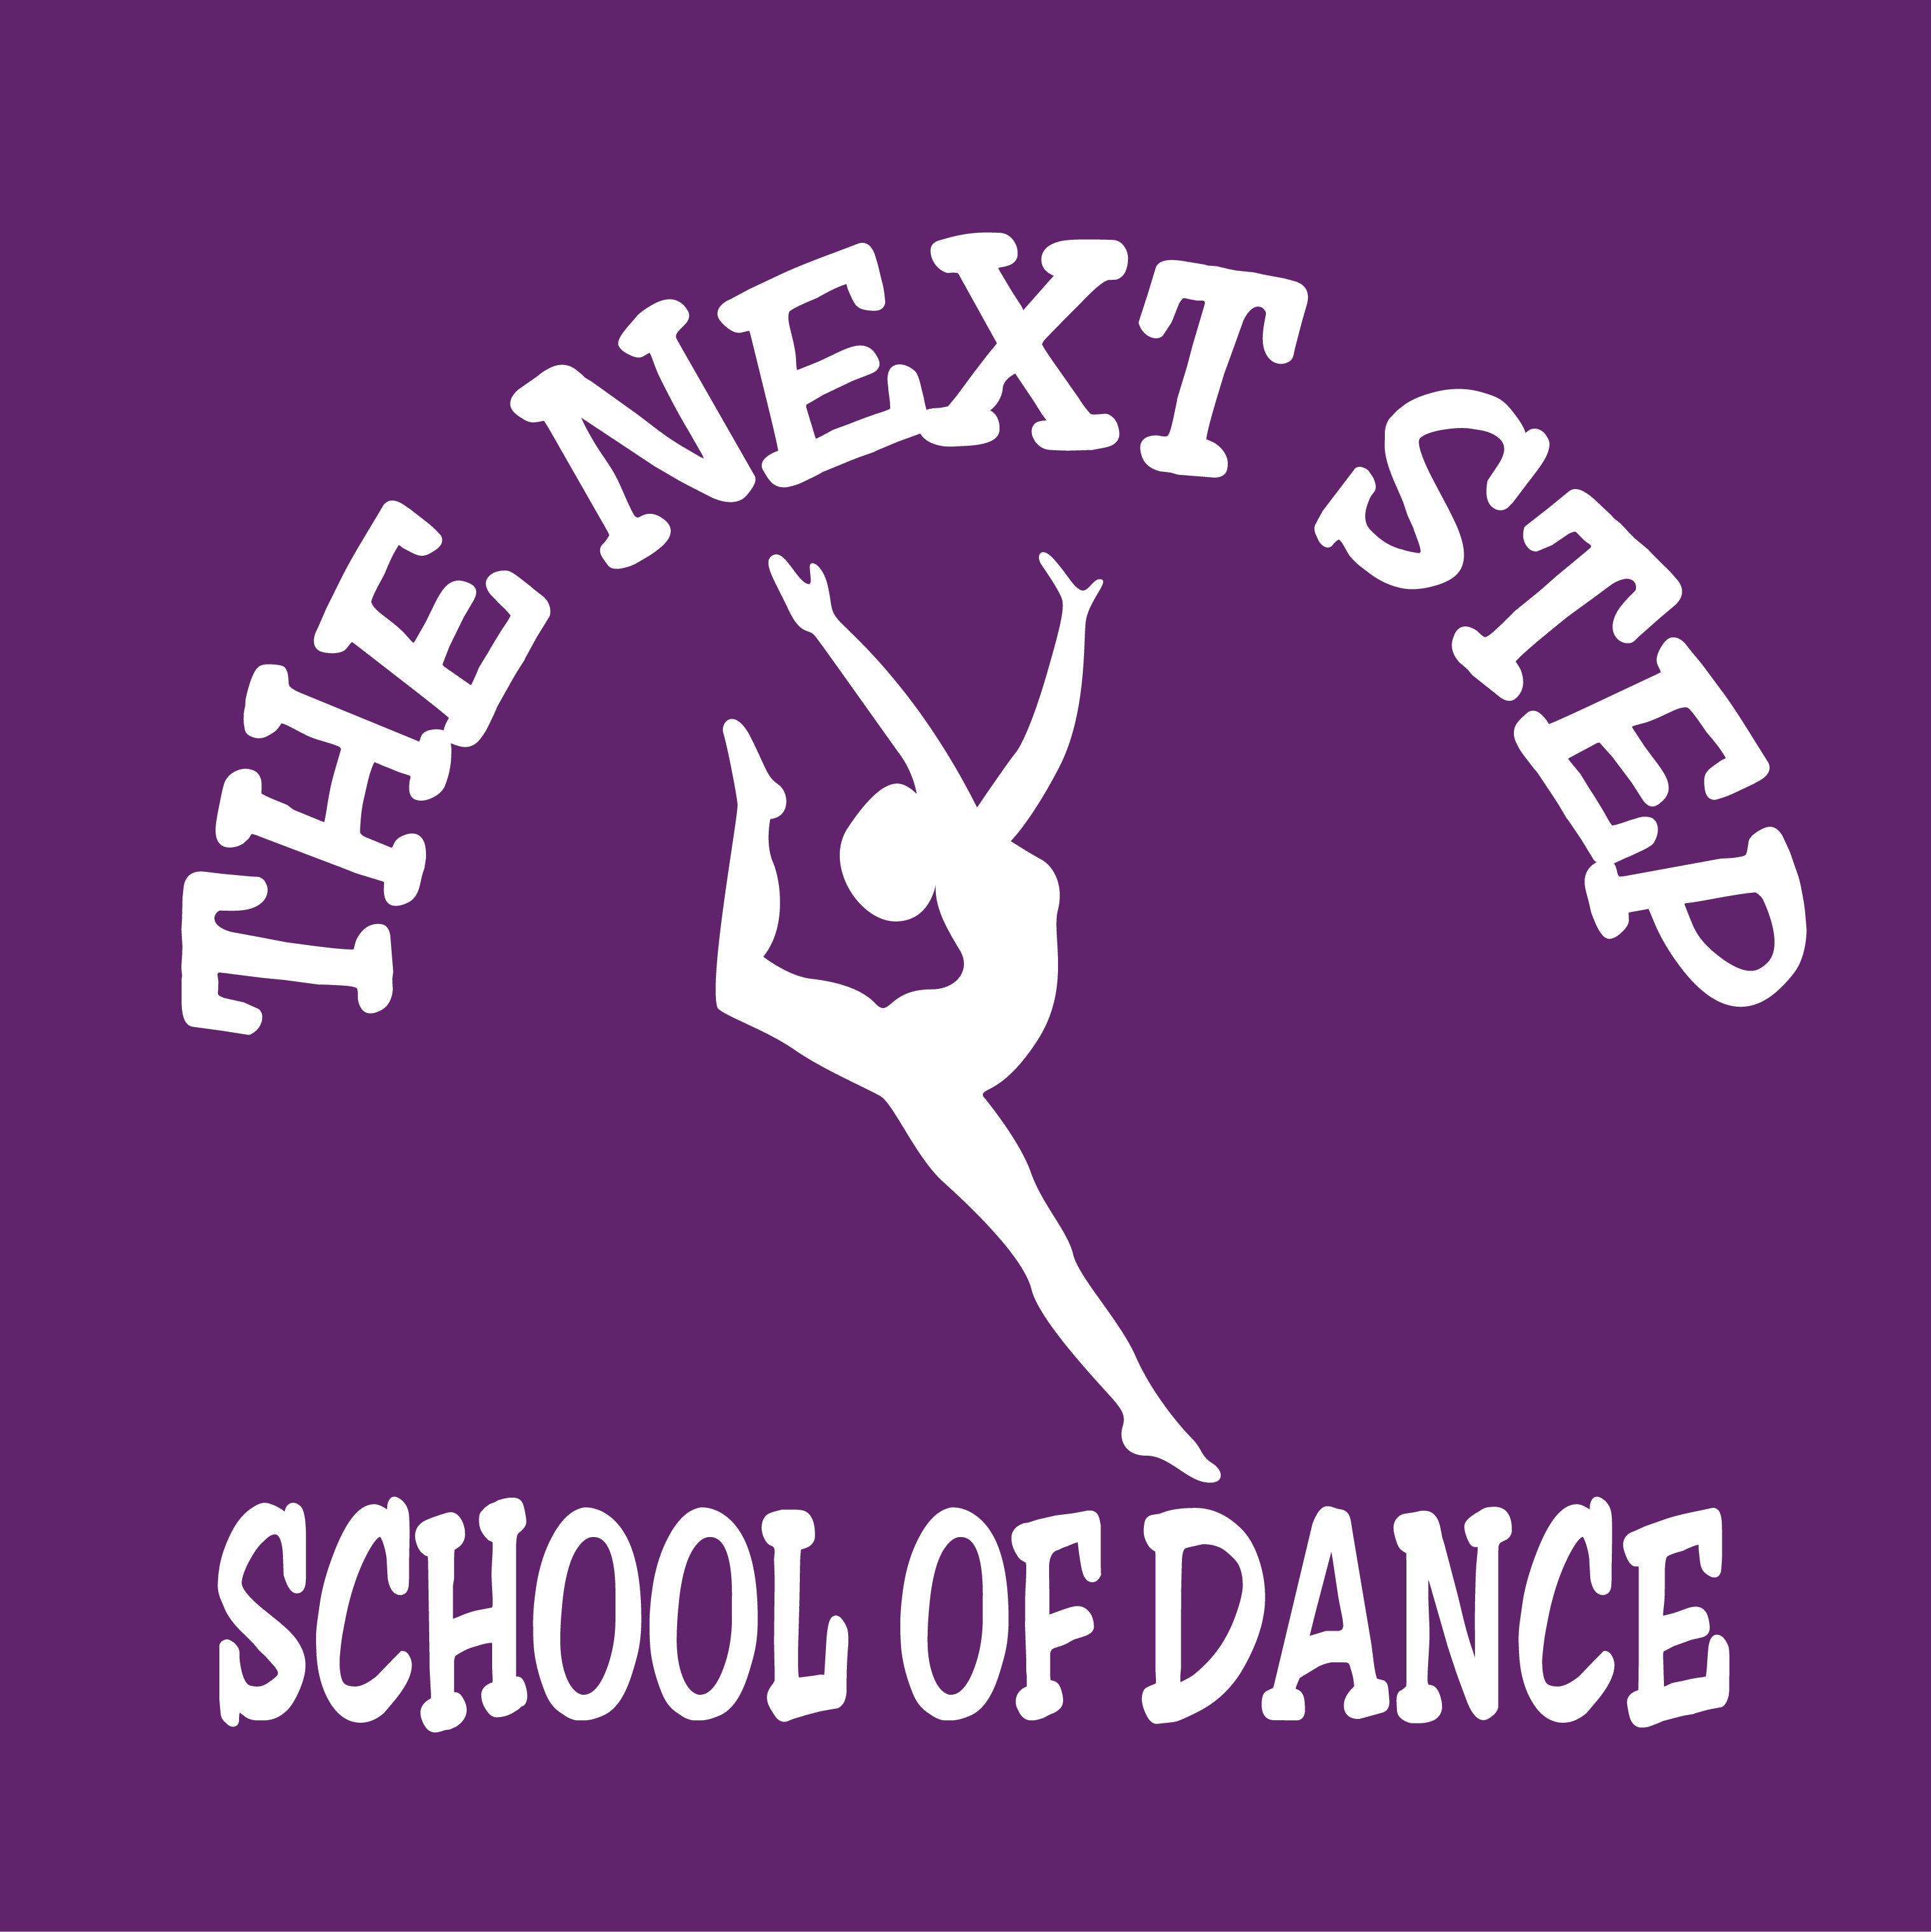 Next Step School Of Dance logo